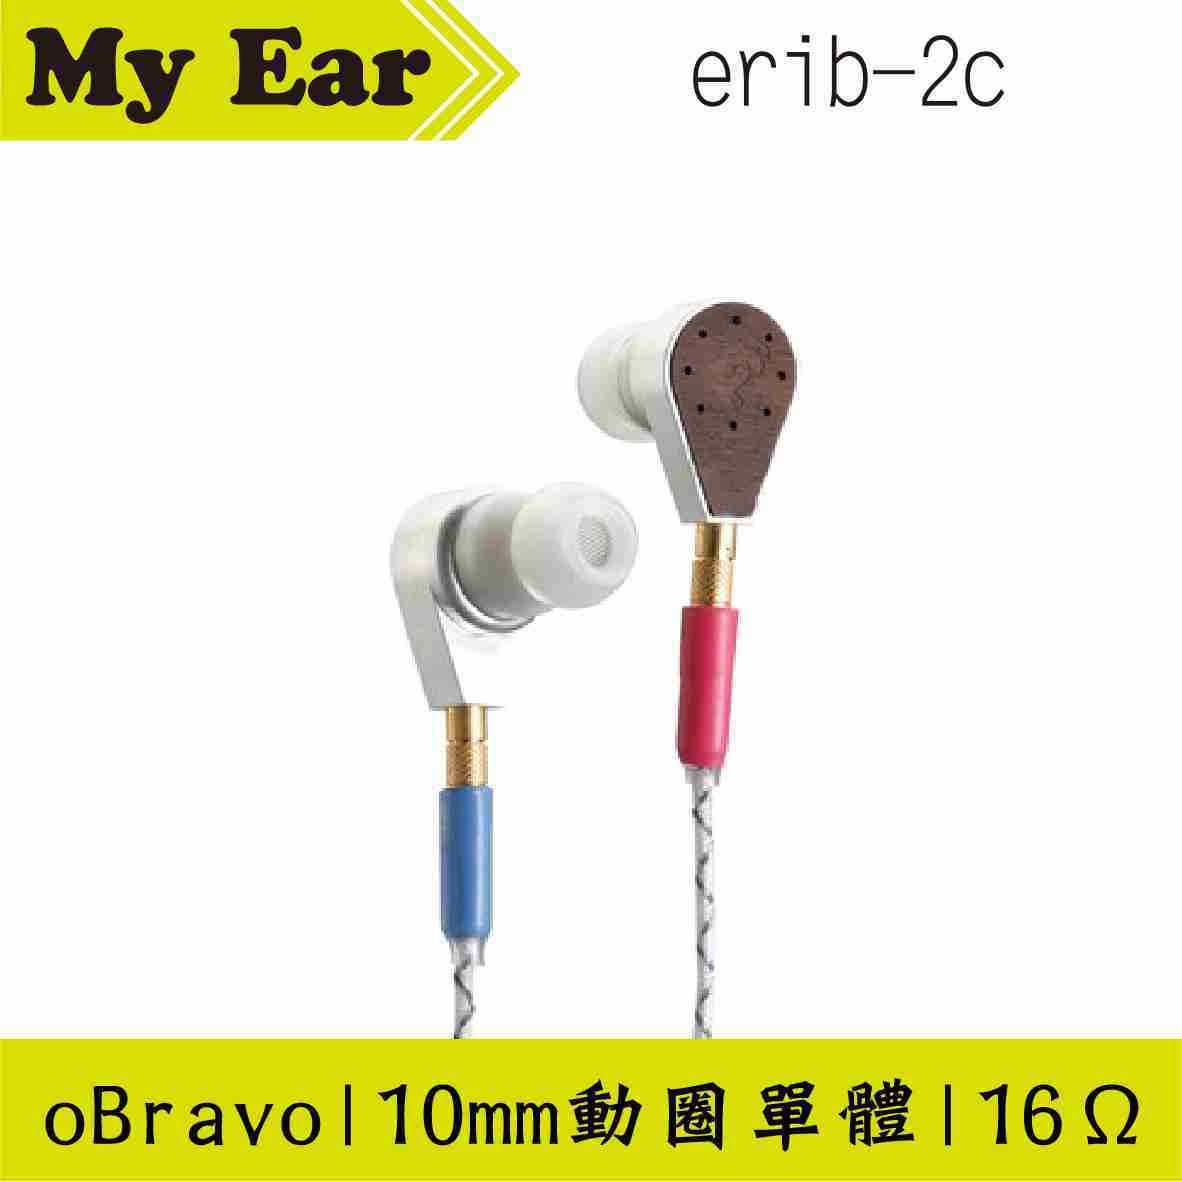 oBravo erib-3a 耳道式耳機 平面振膜 | My Ear耳機專門店